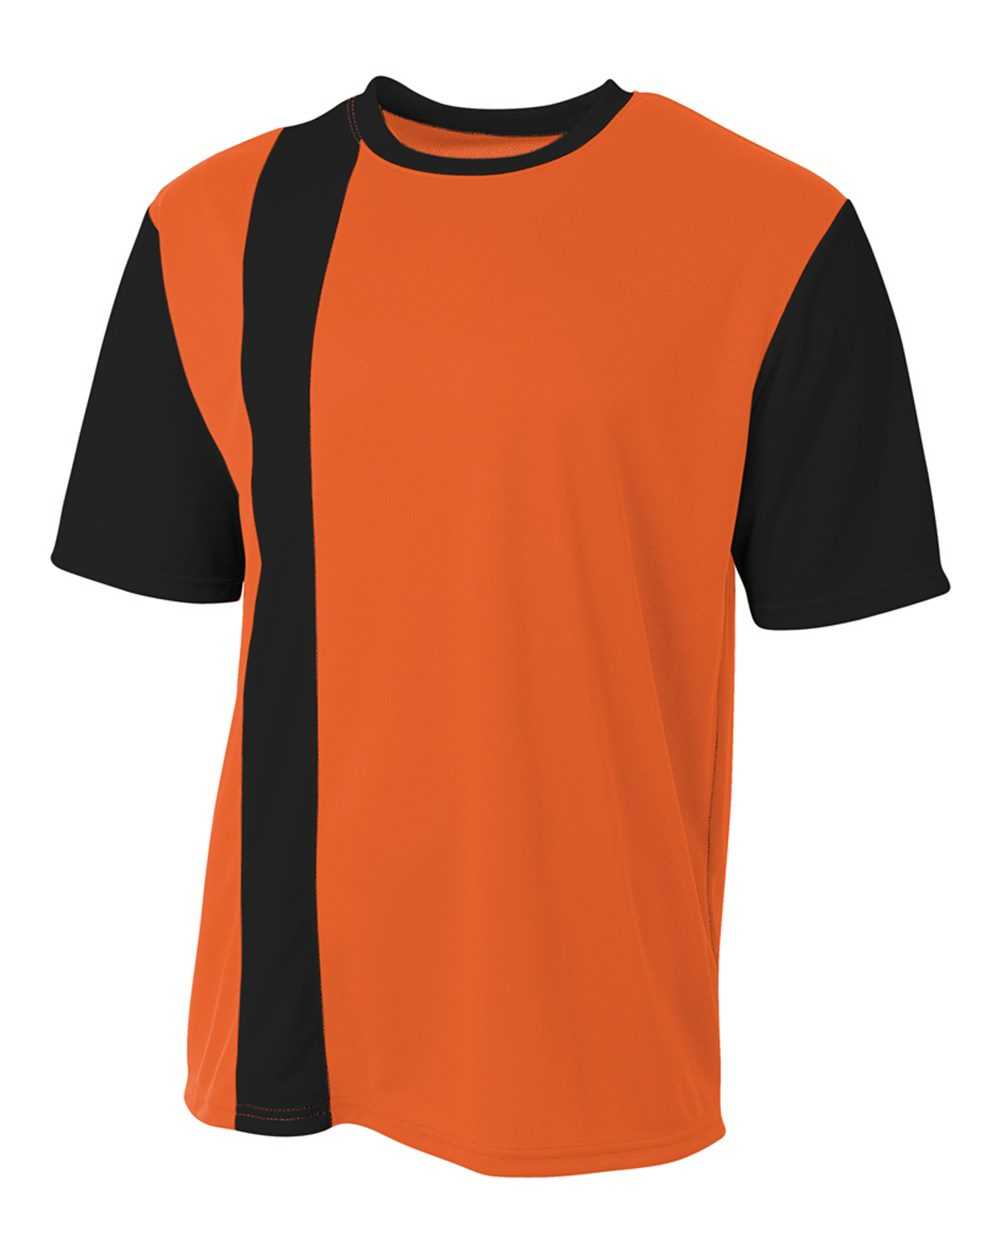 A4 NB3016 Legend Soccer Jersey - Orange Black - HIT a Double